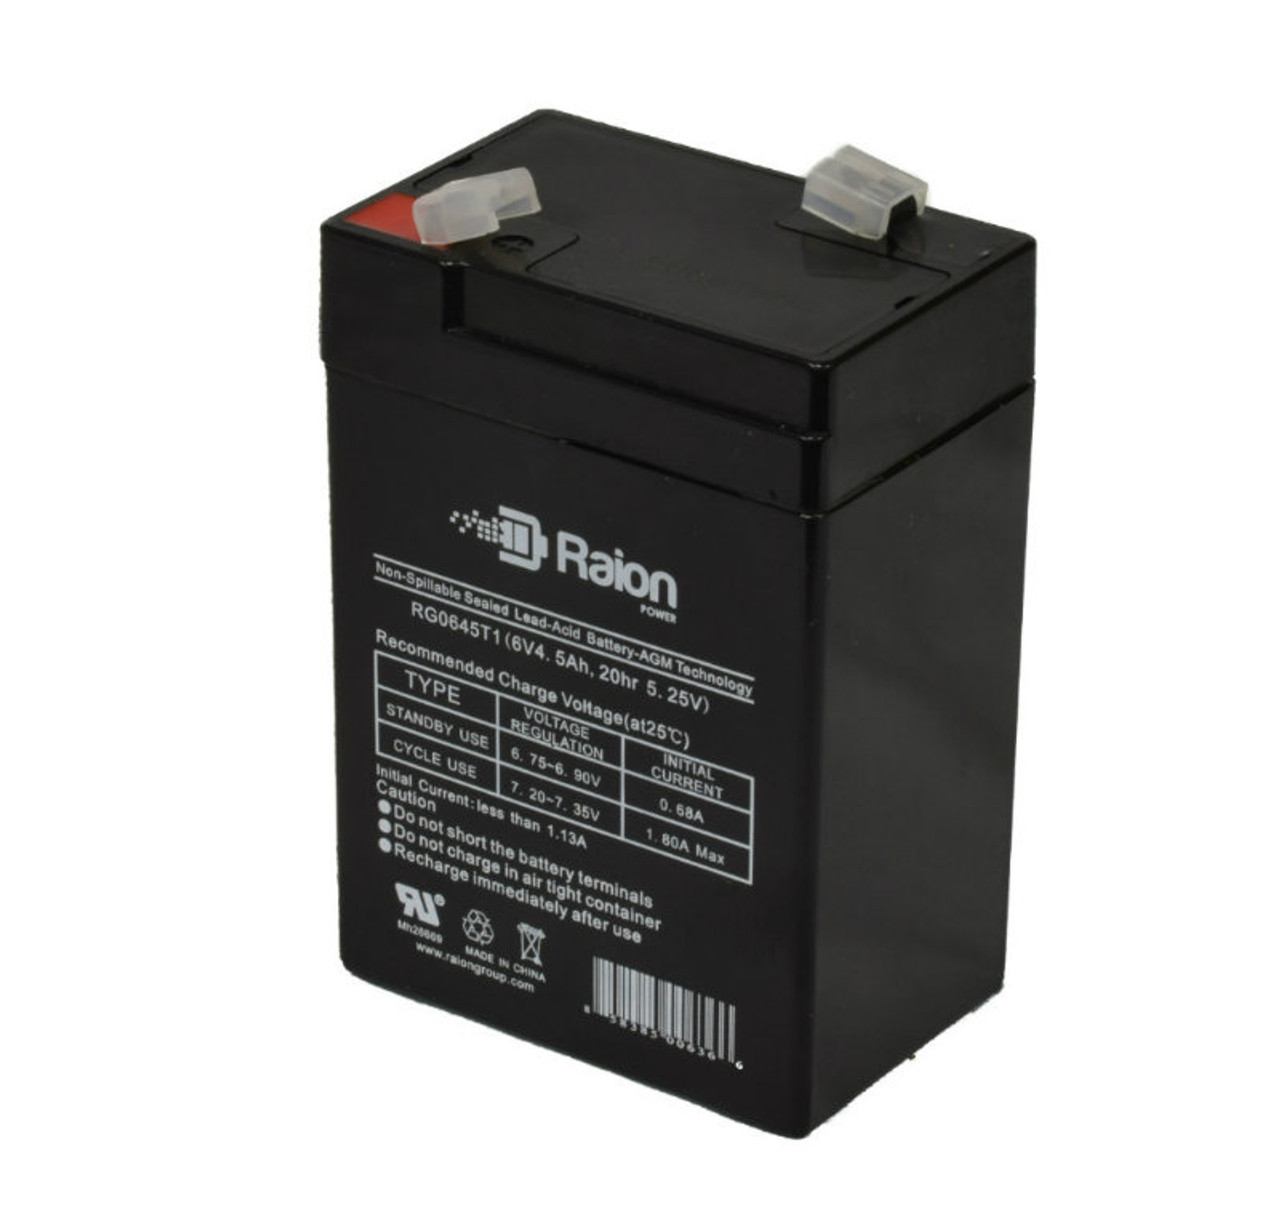 Raion Power RG0645T1 6V 4.5Ah Replacement Battery Cartridge for Wonderlanes 2863 Lil ATV Quad